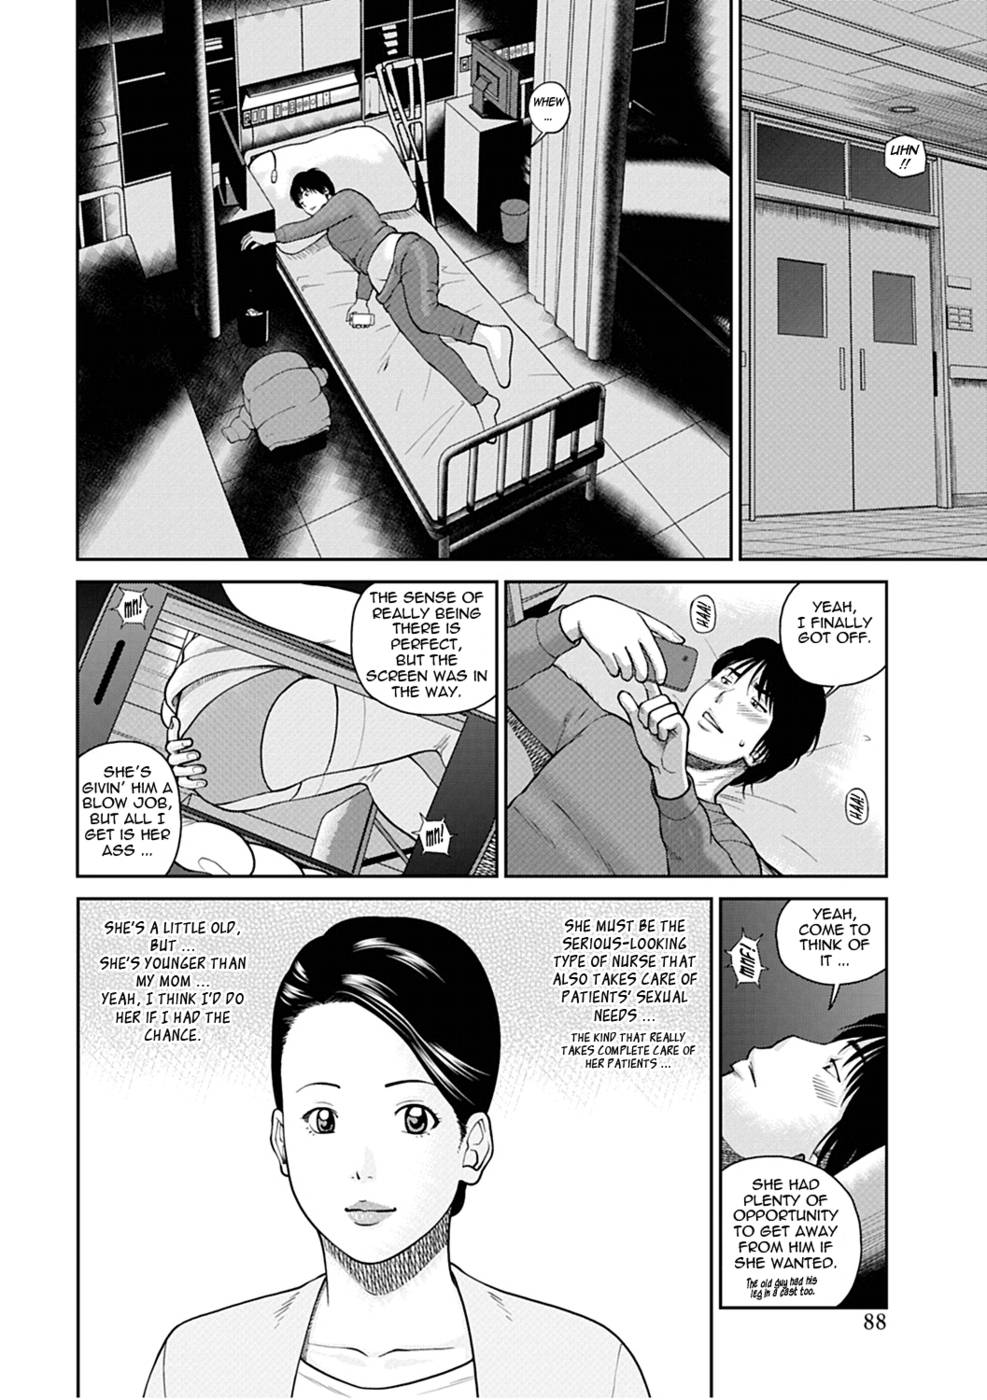 Hentai Manga Comic-34 Year Old Unsatisfied Wife-Chapter 5-Married Nurse-6